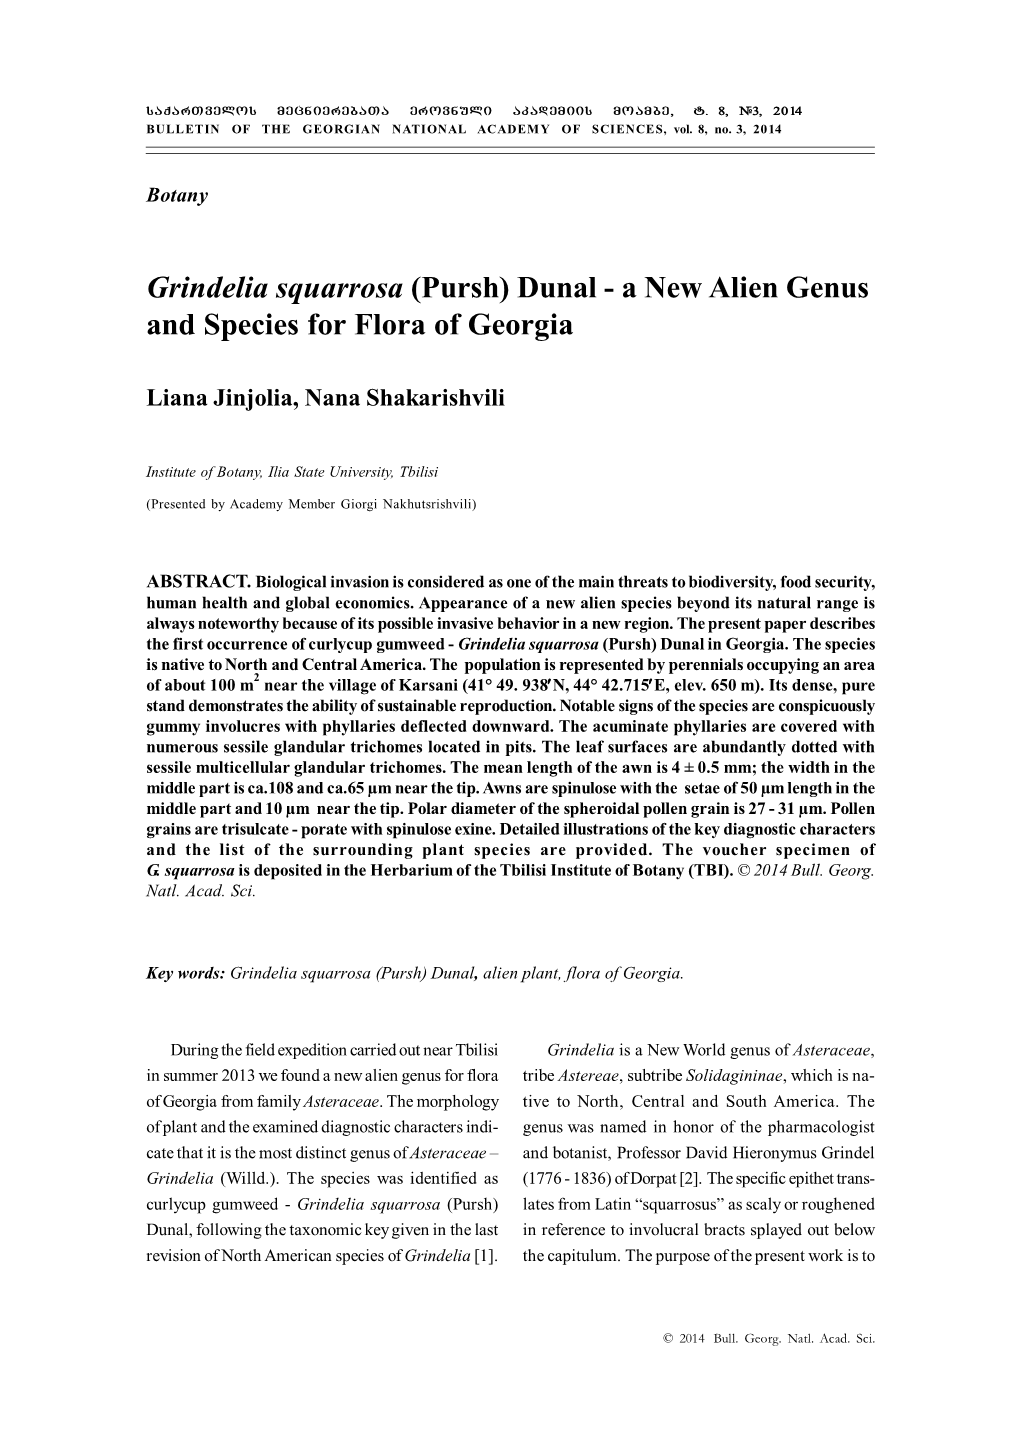 Grindelia Squarrosa (Pursh) Dunal - a New Alien Genus and Species for Flora of Georgia